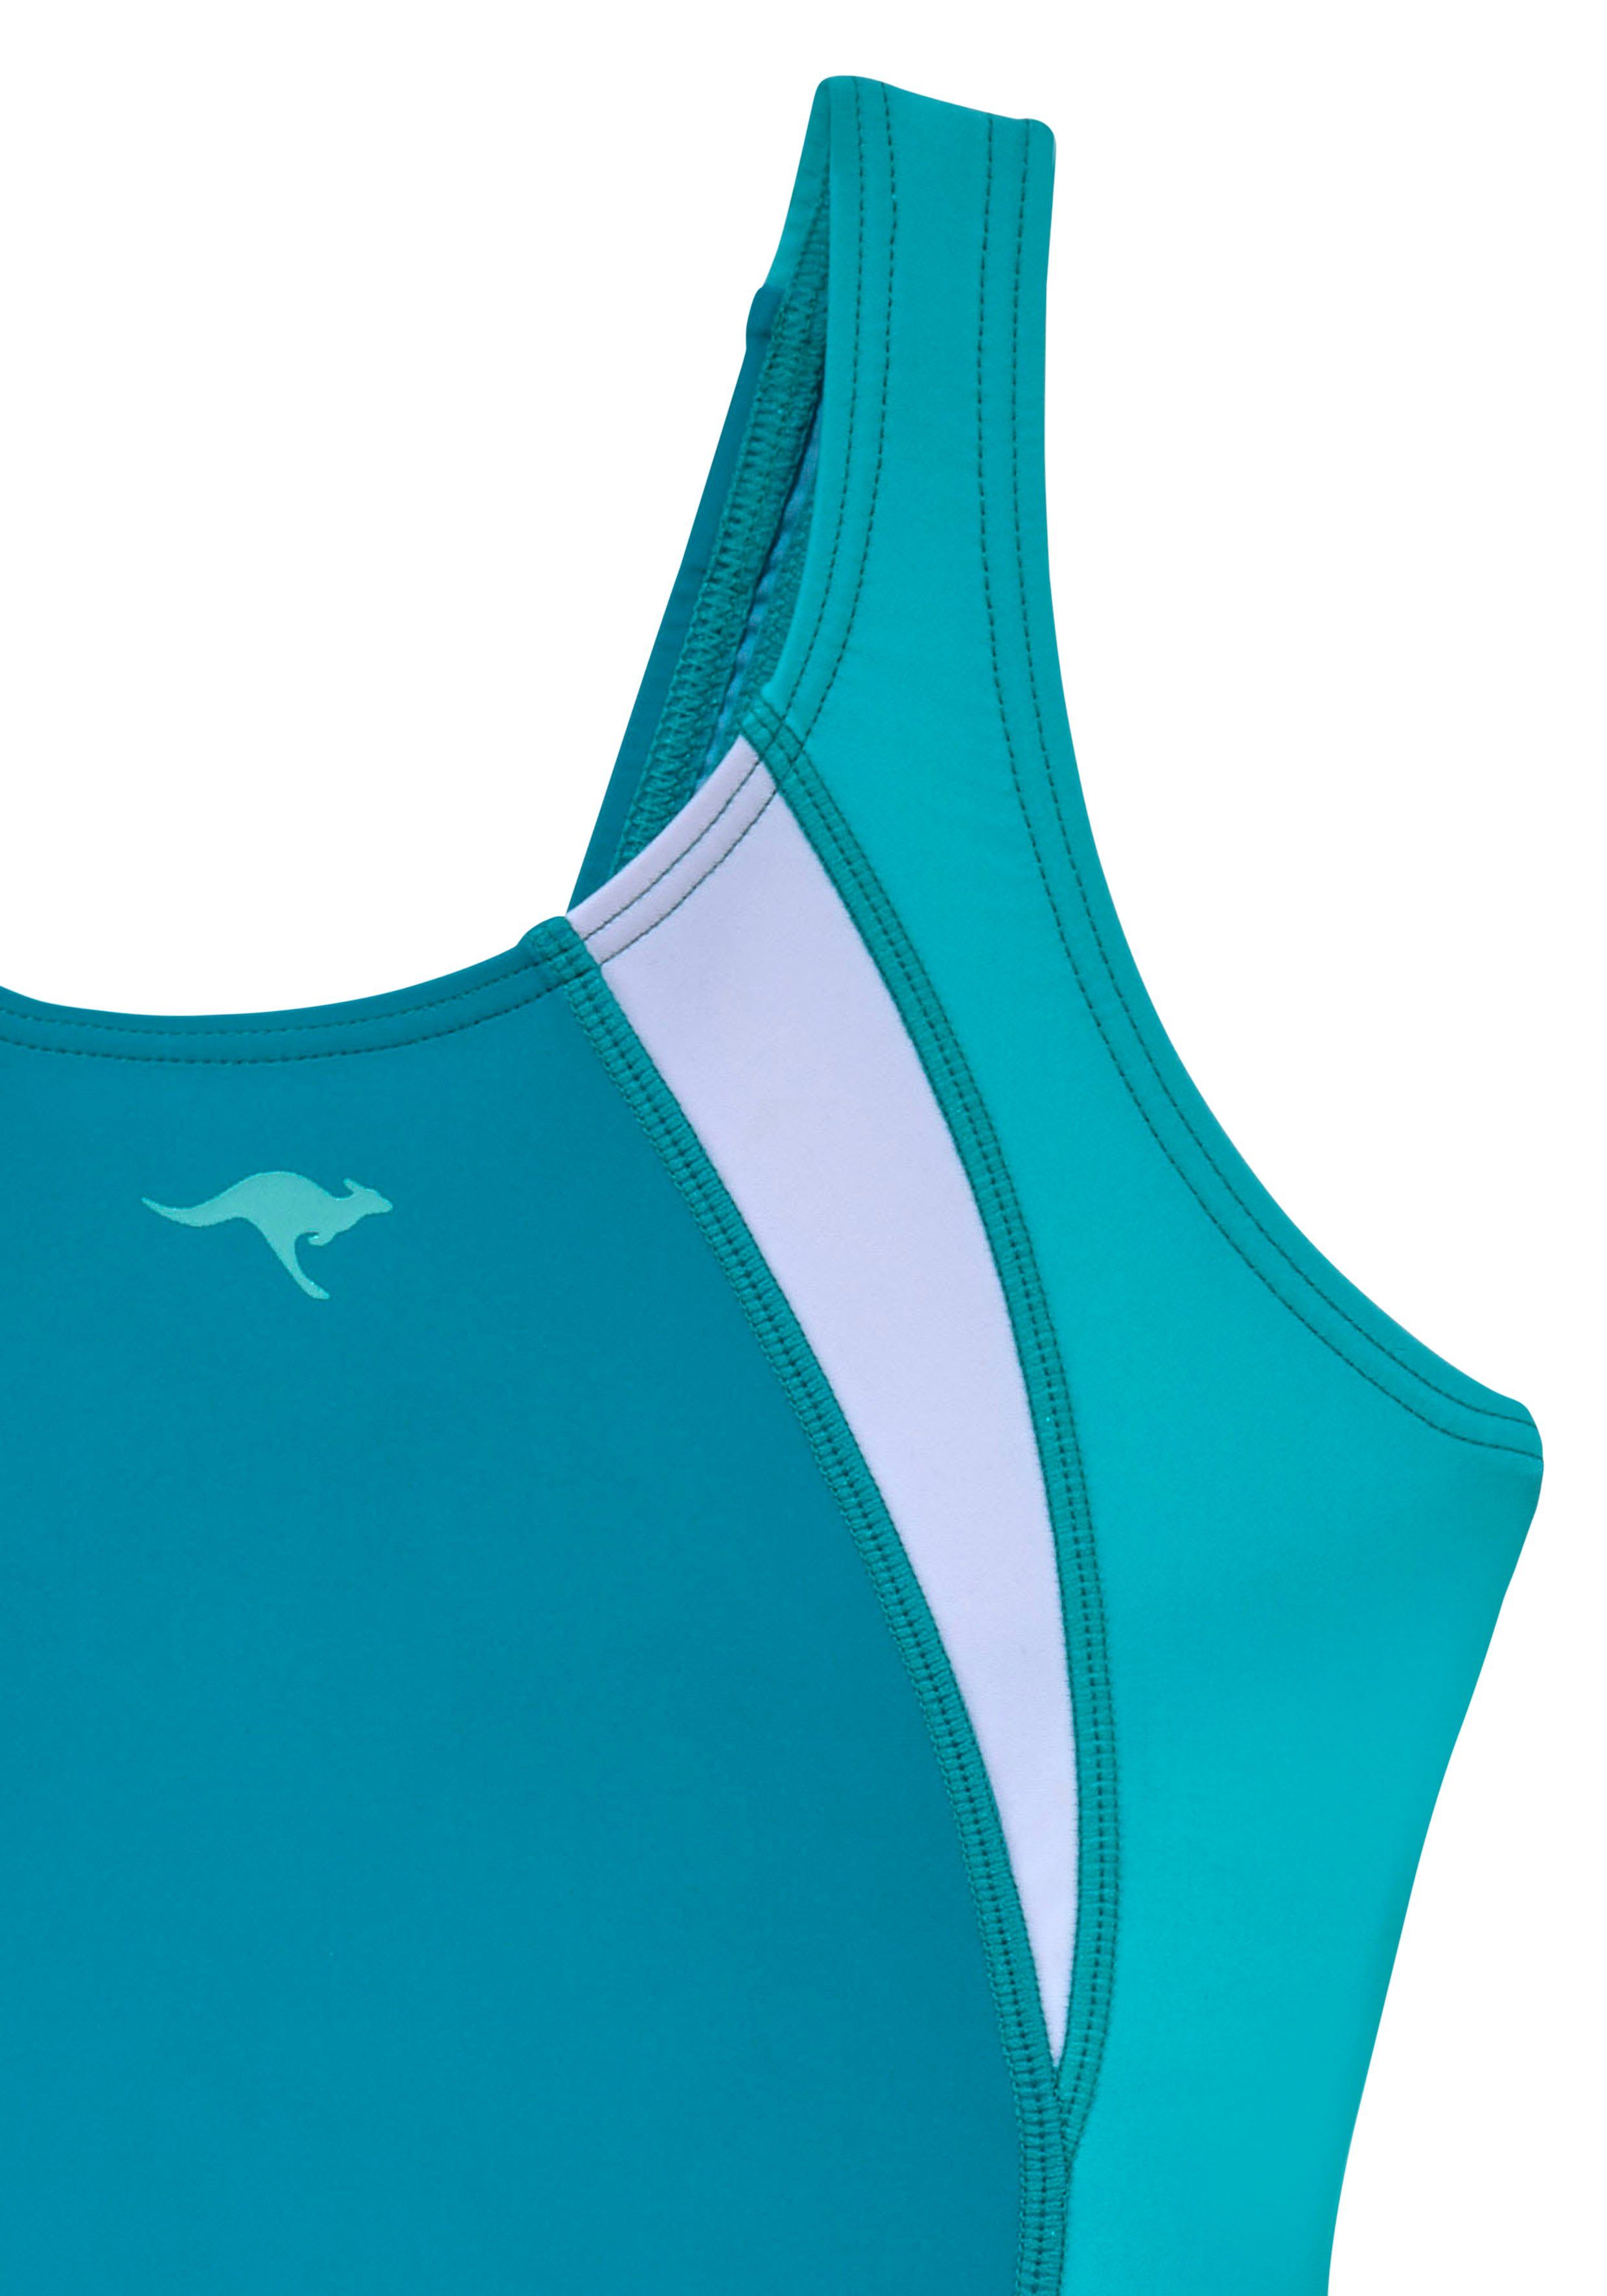 Badeanzug sportlichen türkis-blau im Farbmix KangaROOS